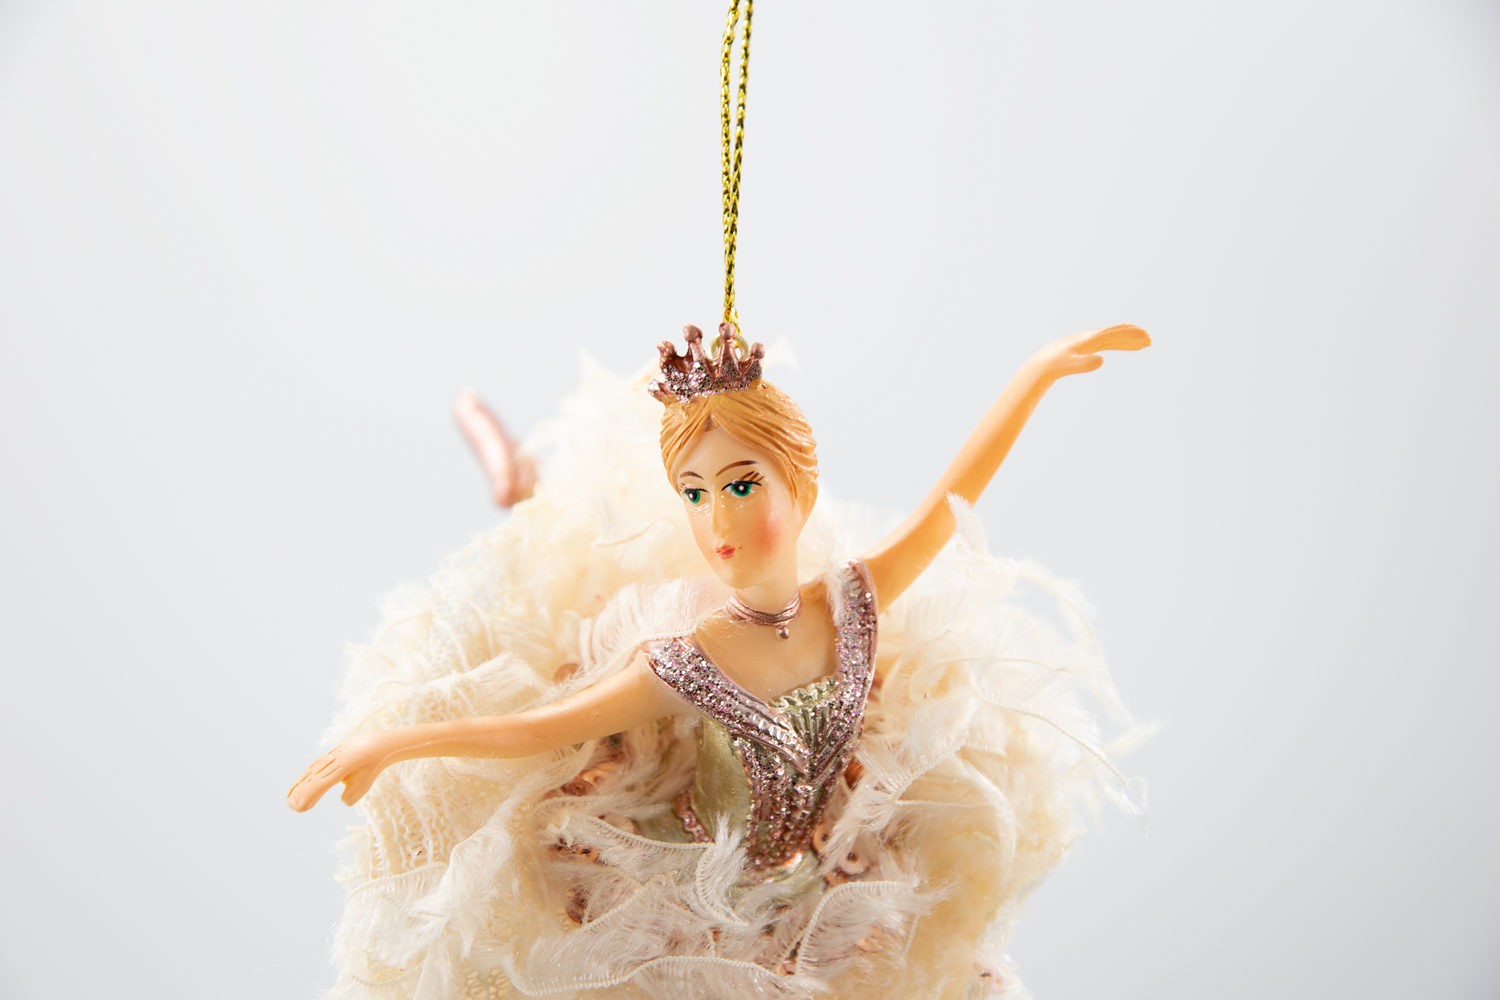 Ballerina Tänzerin Christbaumschmuck